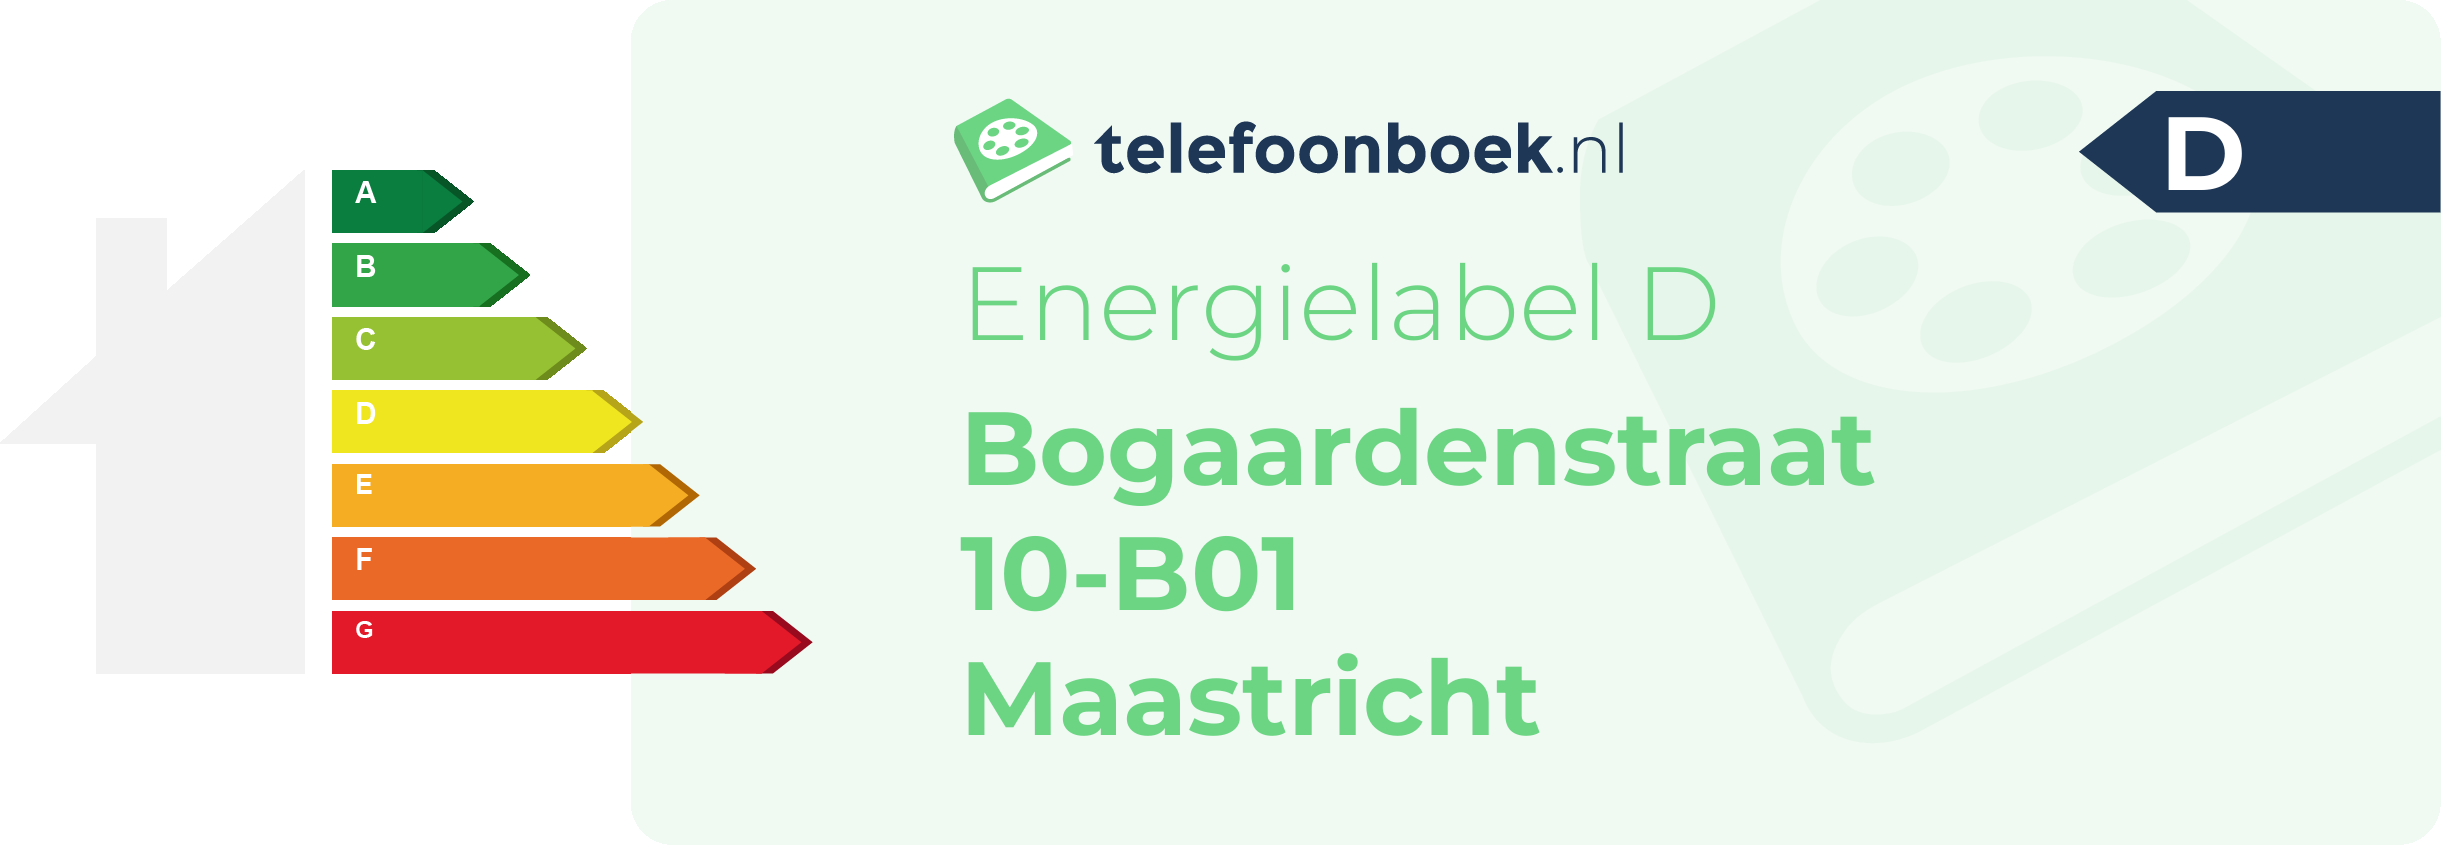 Energielabel Bogaardenstraat 10-B01 Maastricht